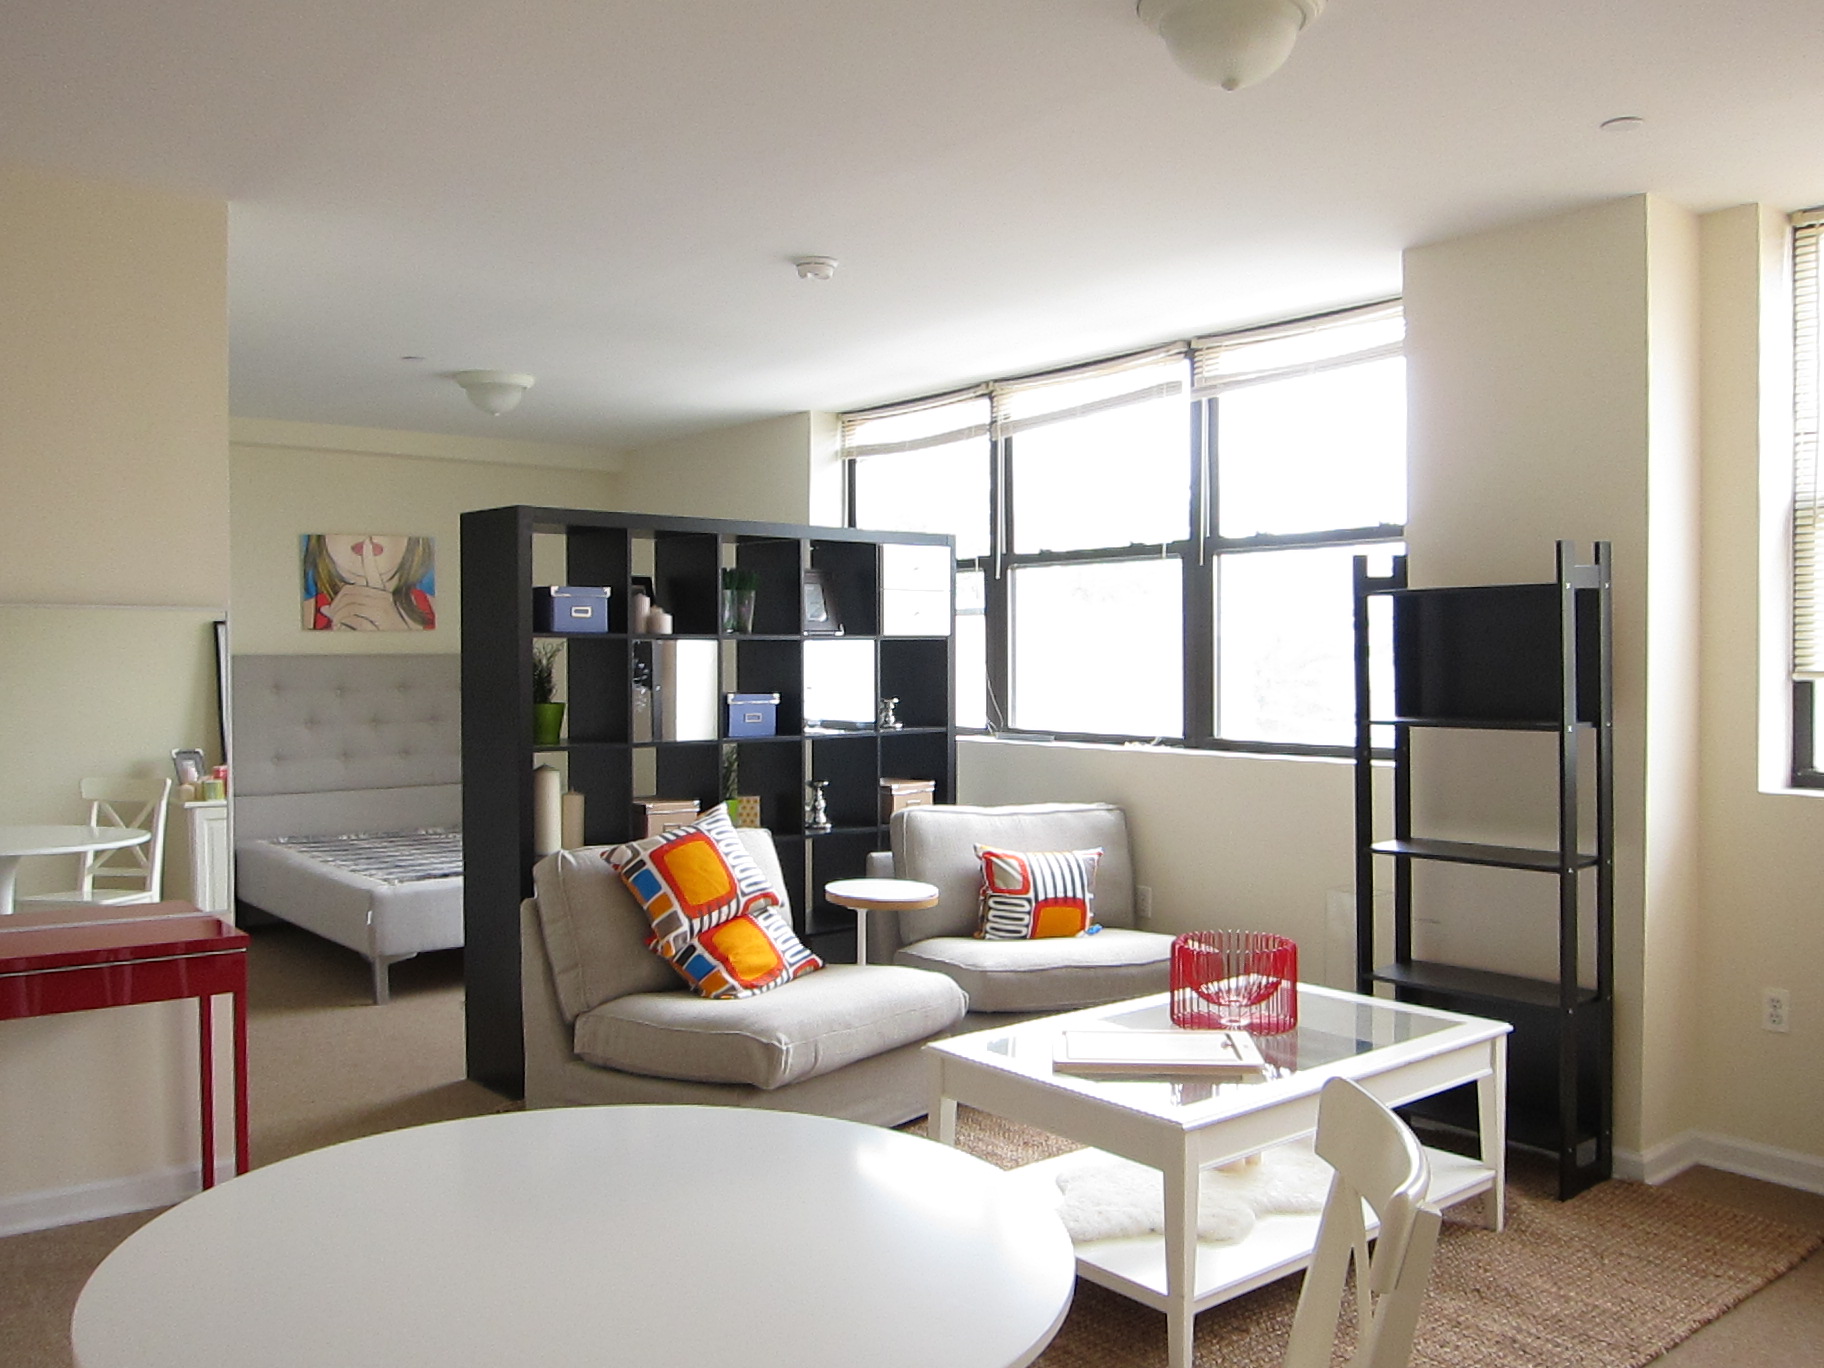 The Pelham Grand - New York's Finest Apartment Complex Opens